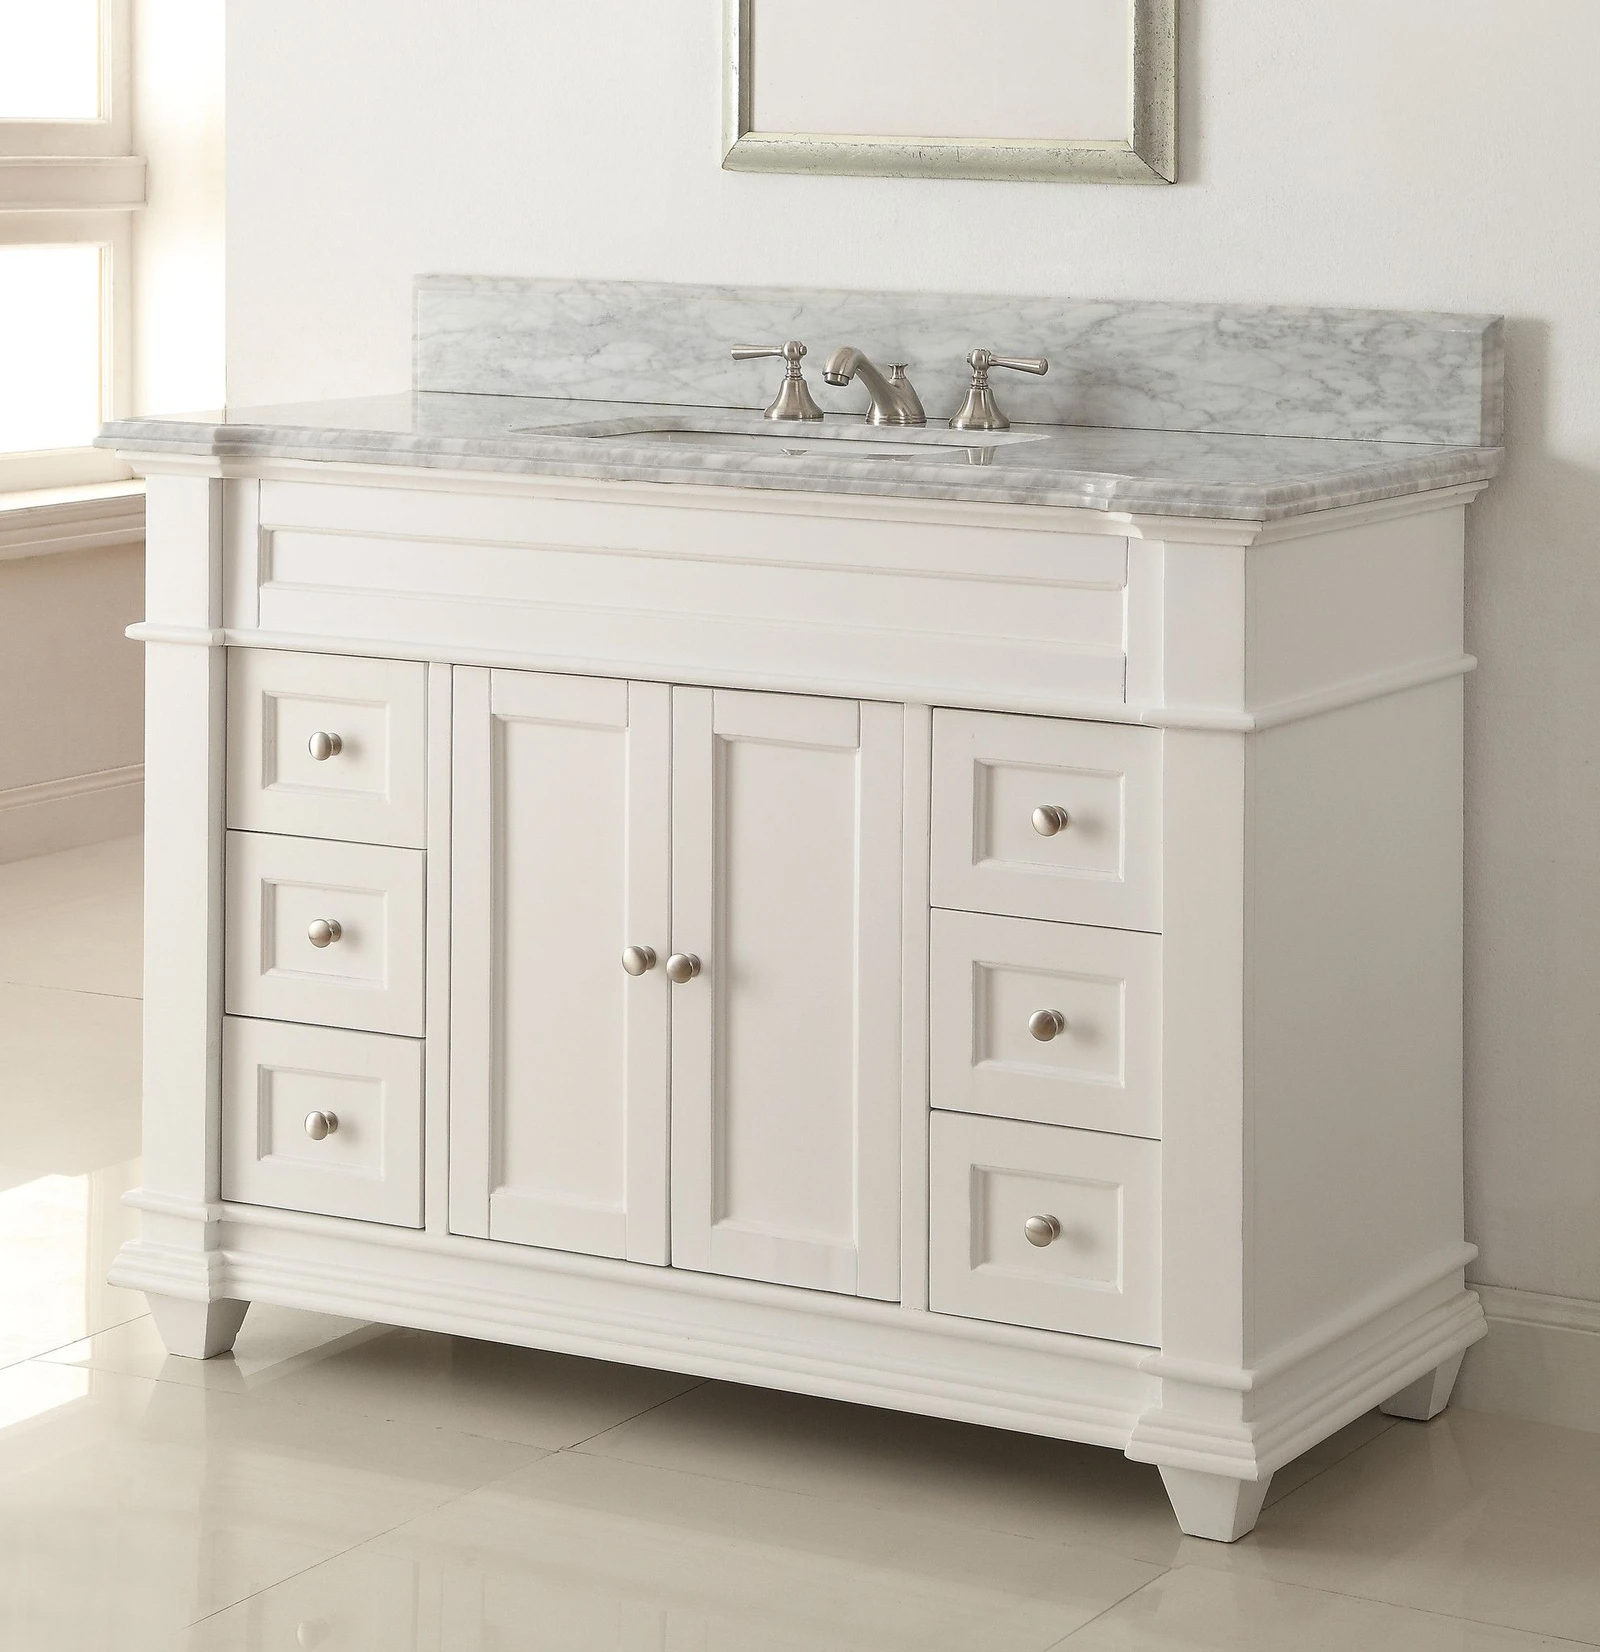 48" Single Bathroom Vanity with Italian Carrara Marble Top 